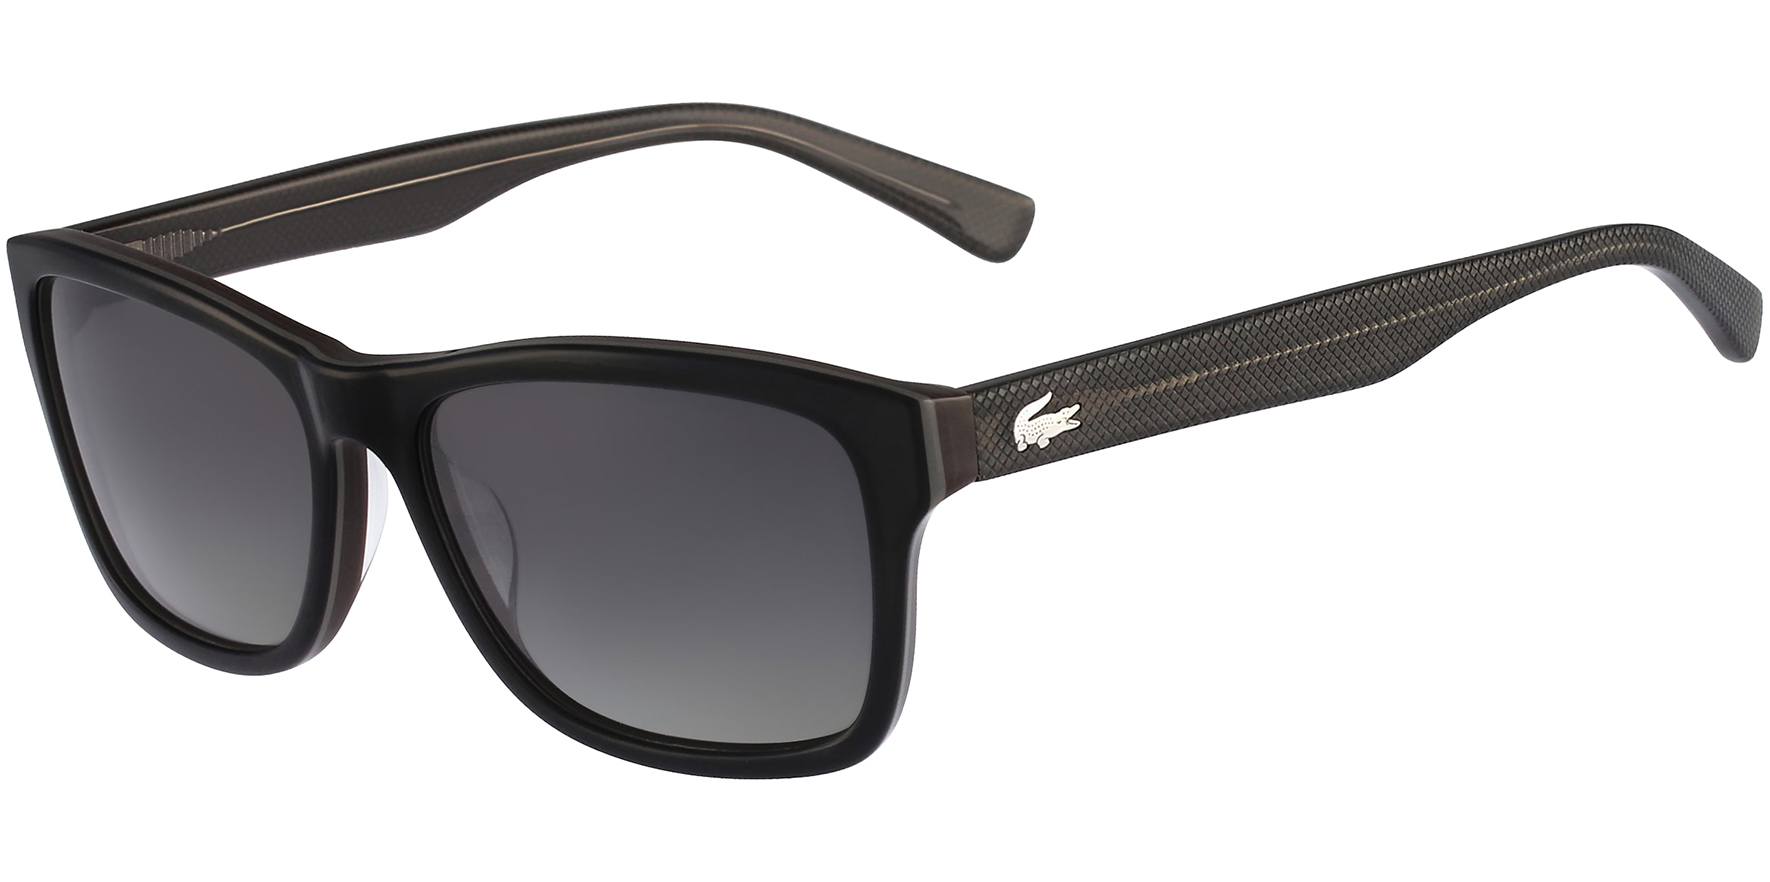 Lacoste Sunglasses: Polarized $37, Non-Polarized $35 + Free Shipping